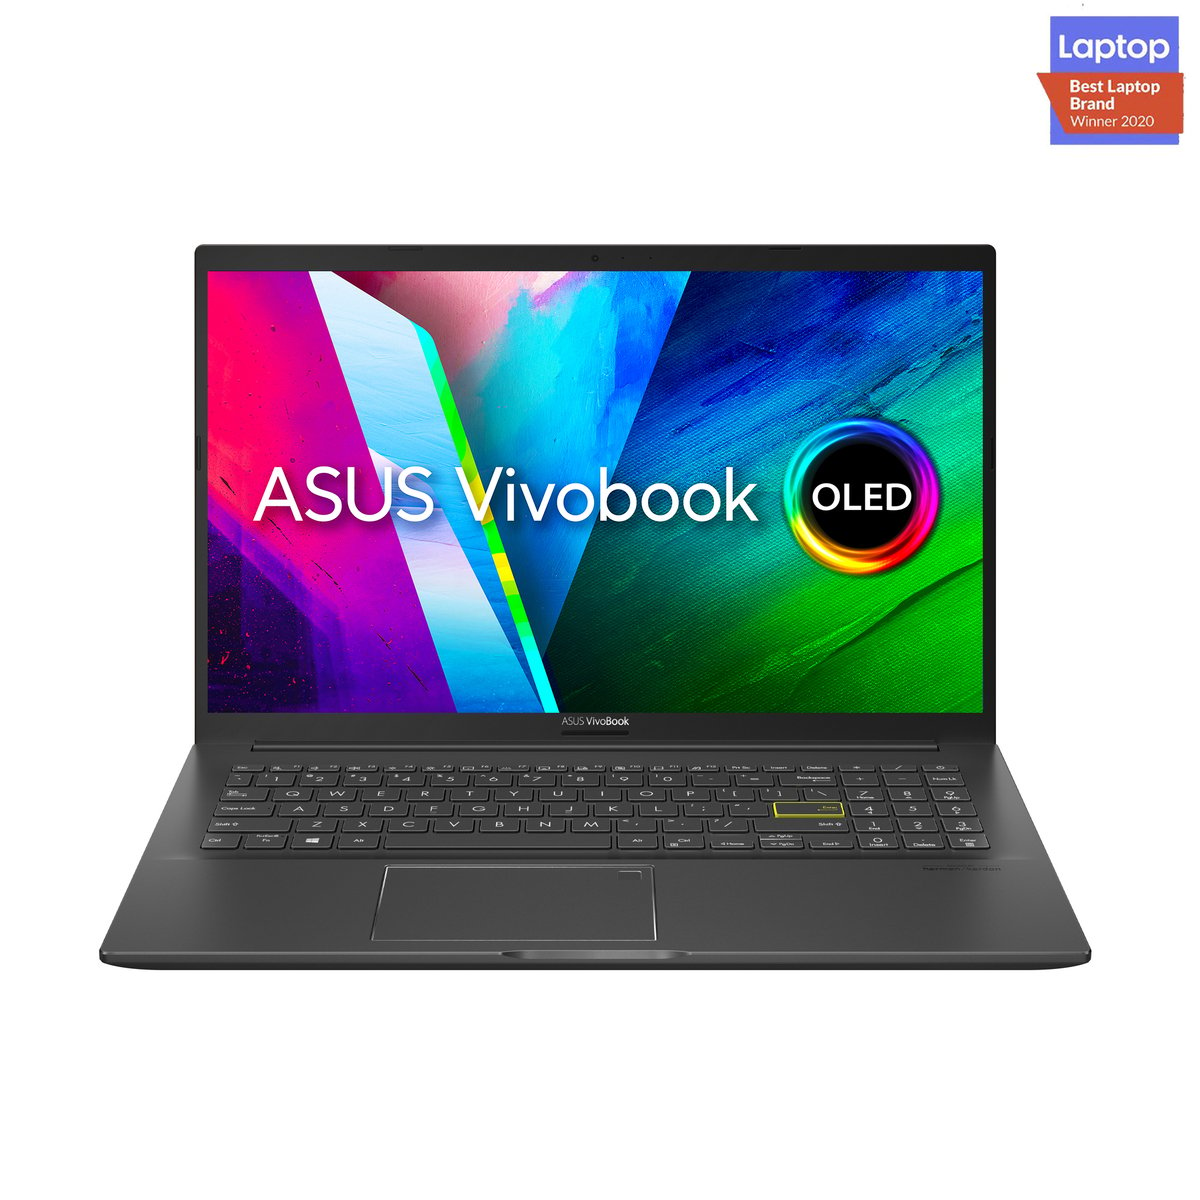 ASUS Vivobook K513EQ-OLED1B5T, Slim Laptop, Core i5-1135G7, 8GB RAM, 512GB PCIE G3 SSD, Nvidia GeForce MX 350 2GB, 15.6 inch FHD (1920X1080) 16:9 OLED, Windows 10 Home, Black